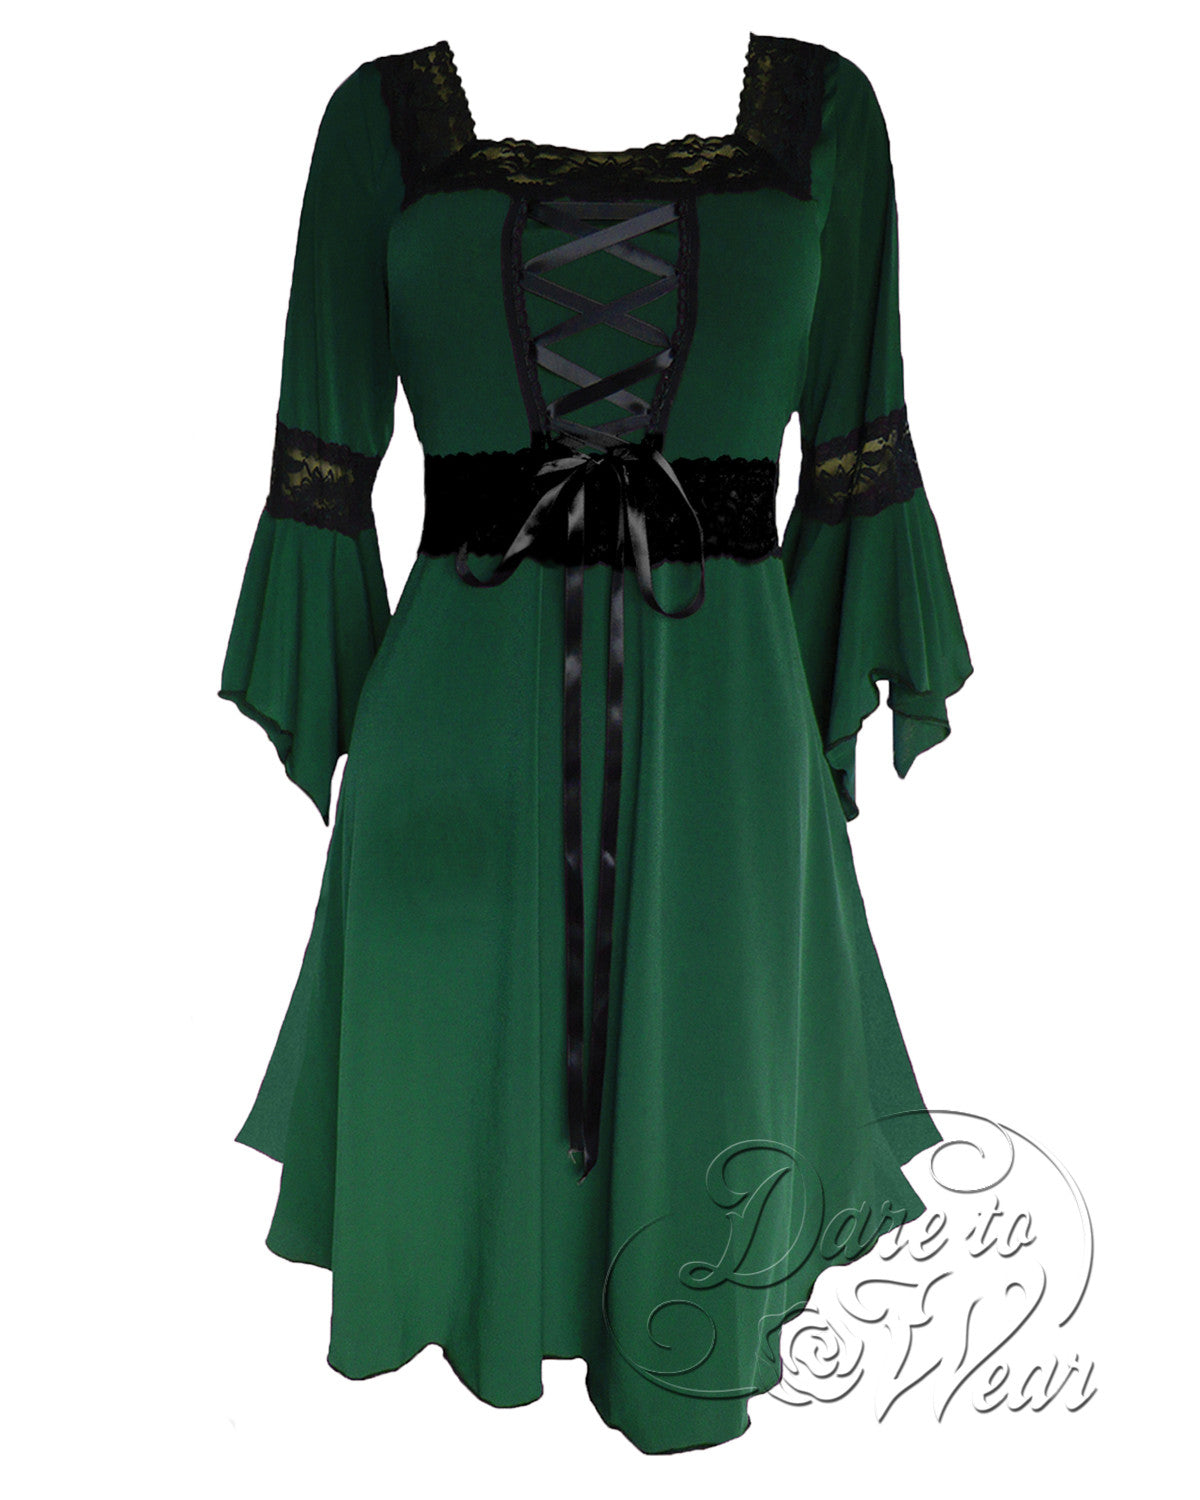 Bright Satin Silky Renaissance Dress Medieval Wedding Gown Victorian,  Elizabethan Renaissance Corset Dress Pink Green Black Options 